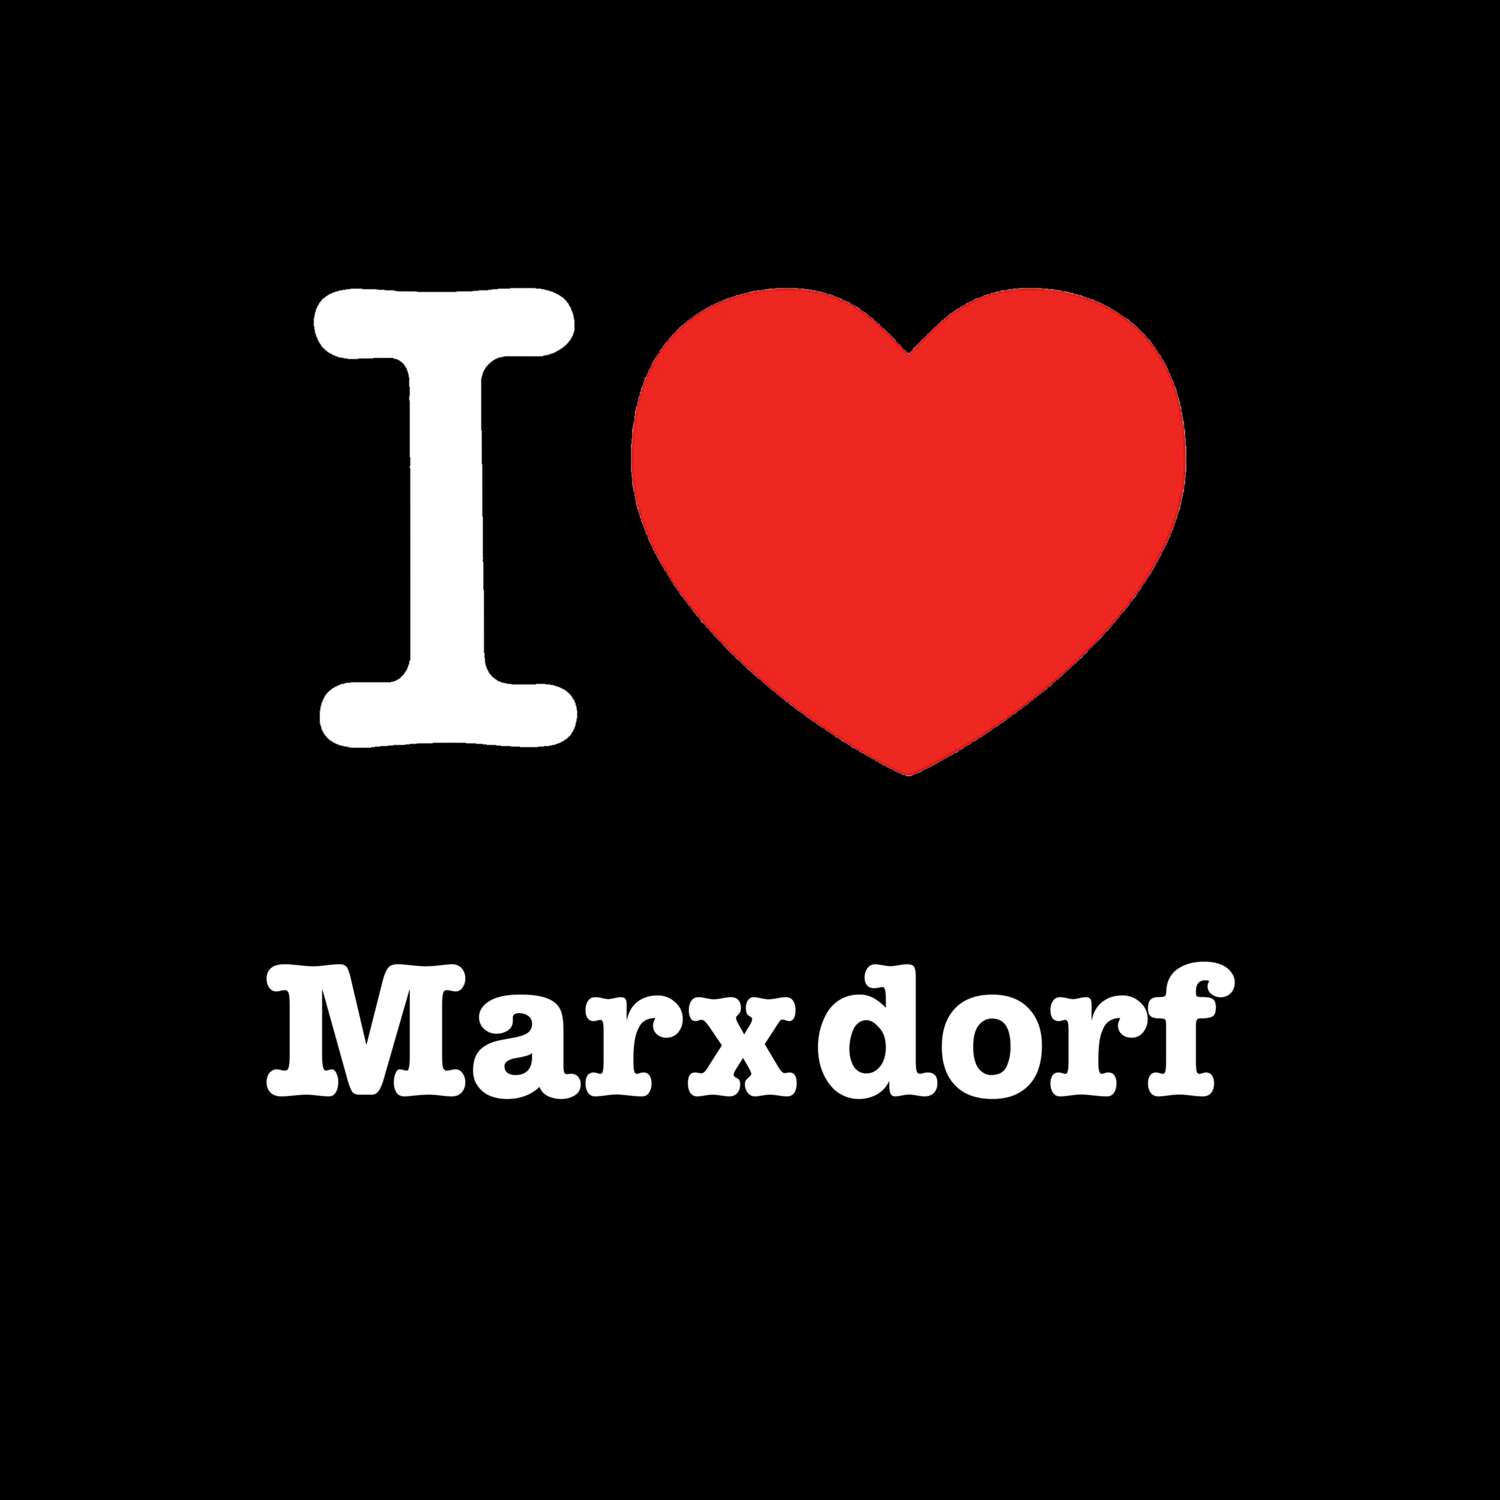 Marxdorf T-Shirt »I love«